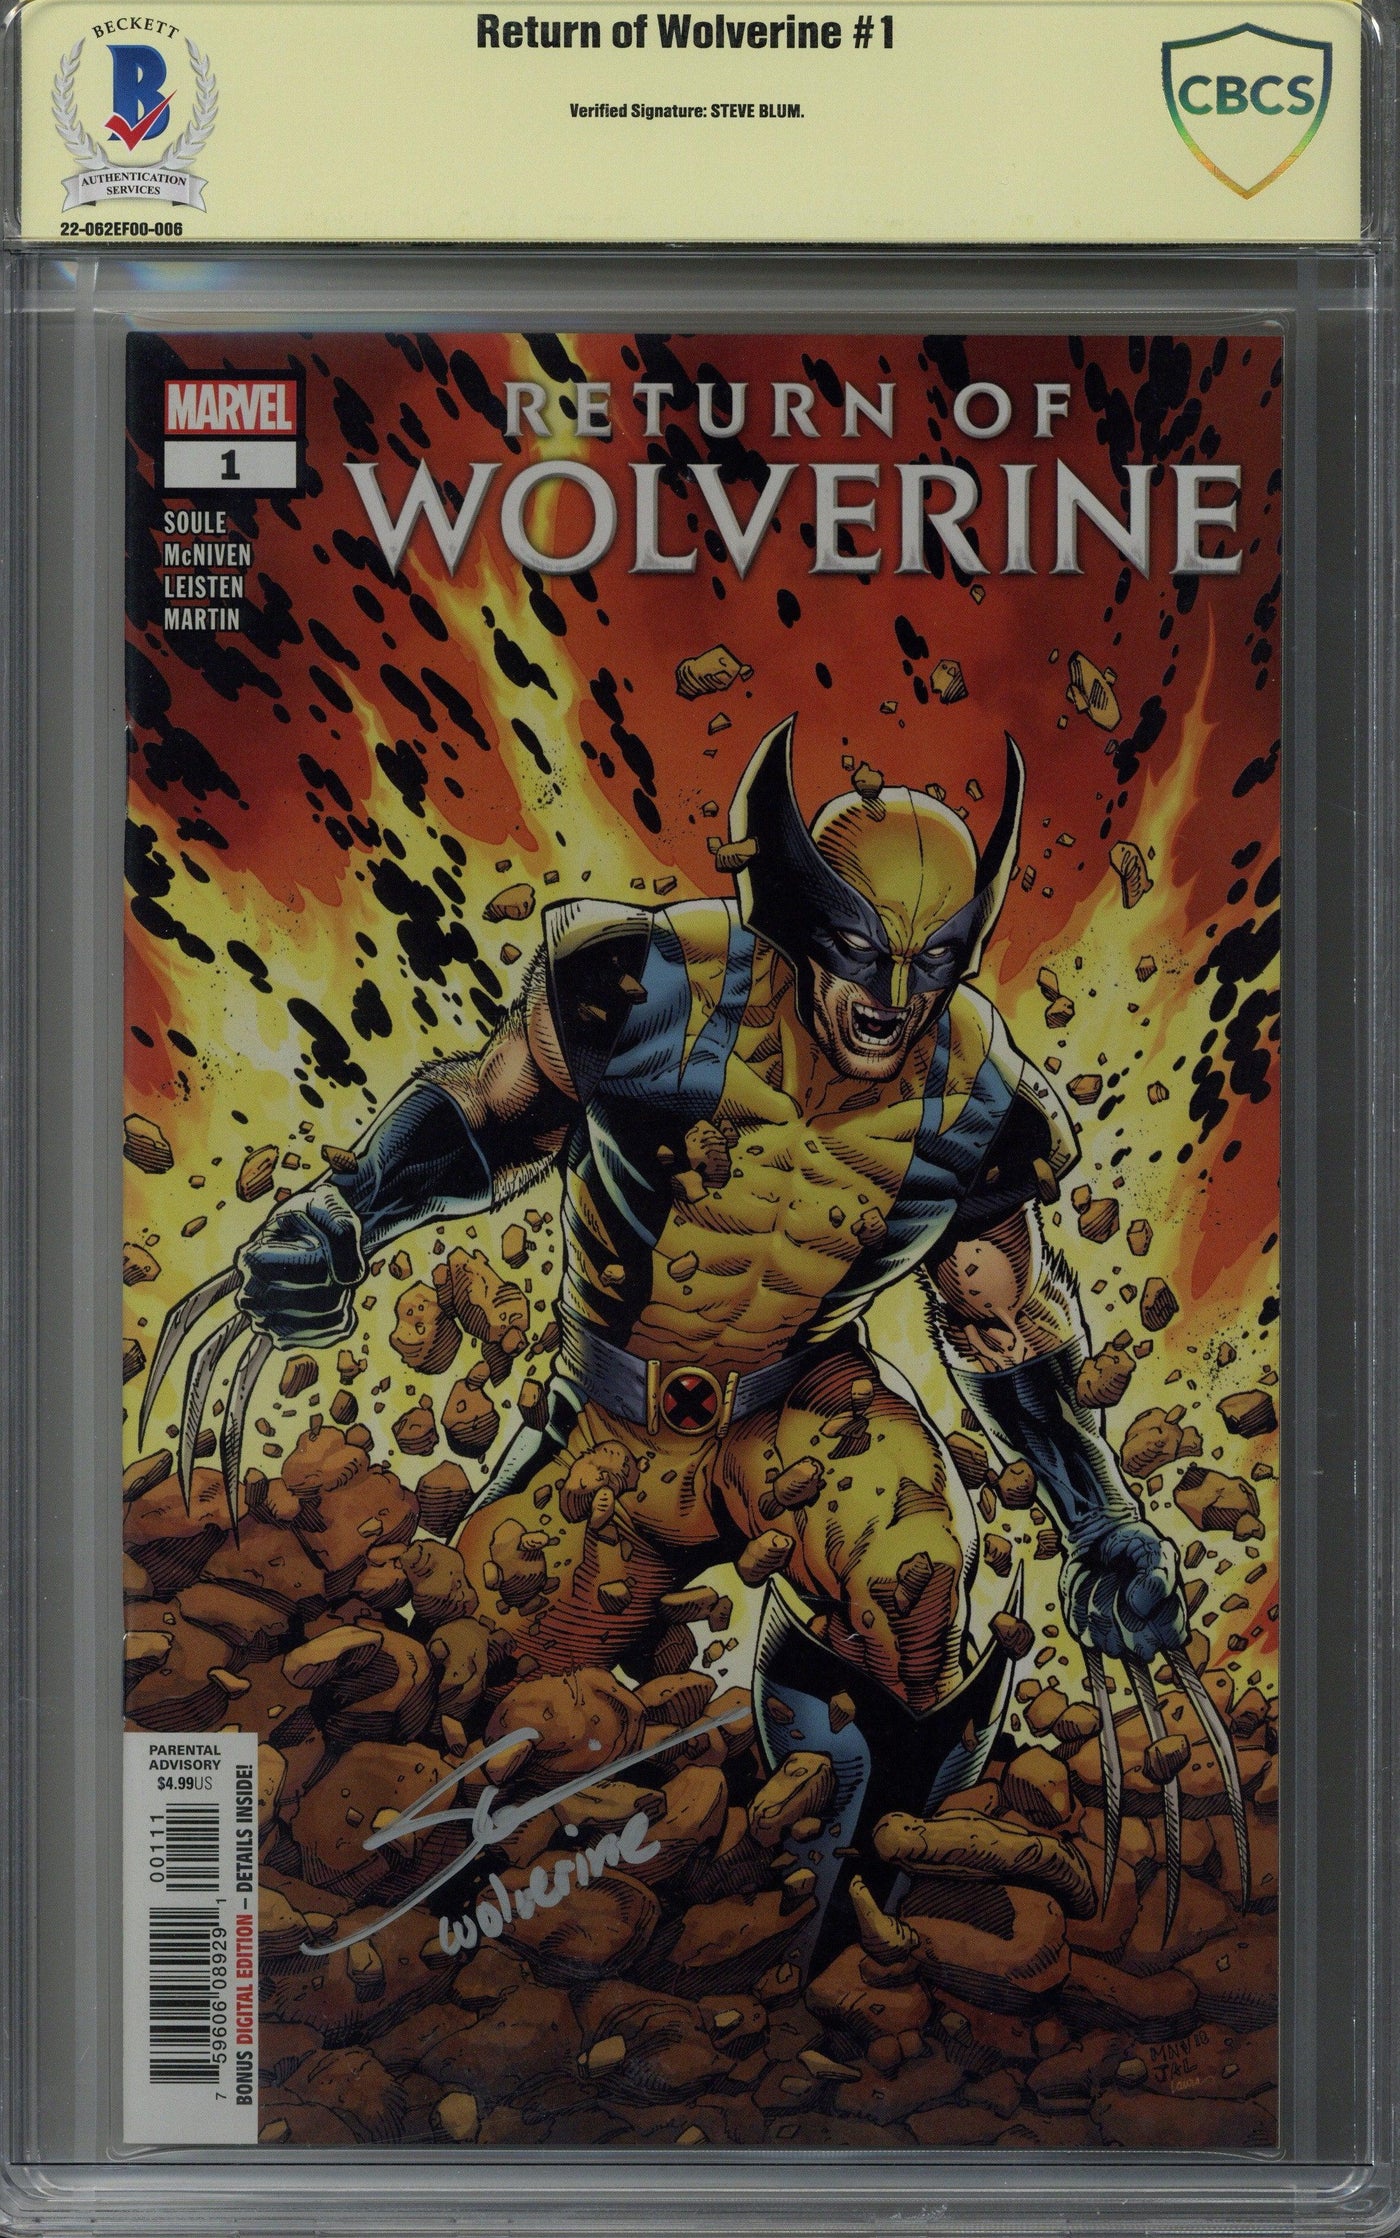 Steve Blum Signed Return of Wolverine #1 Comic Book CBCS - Wolverine Voice Actor